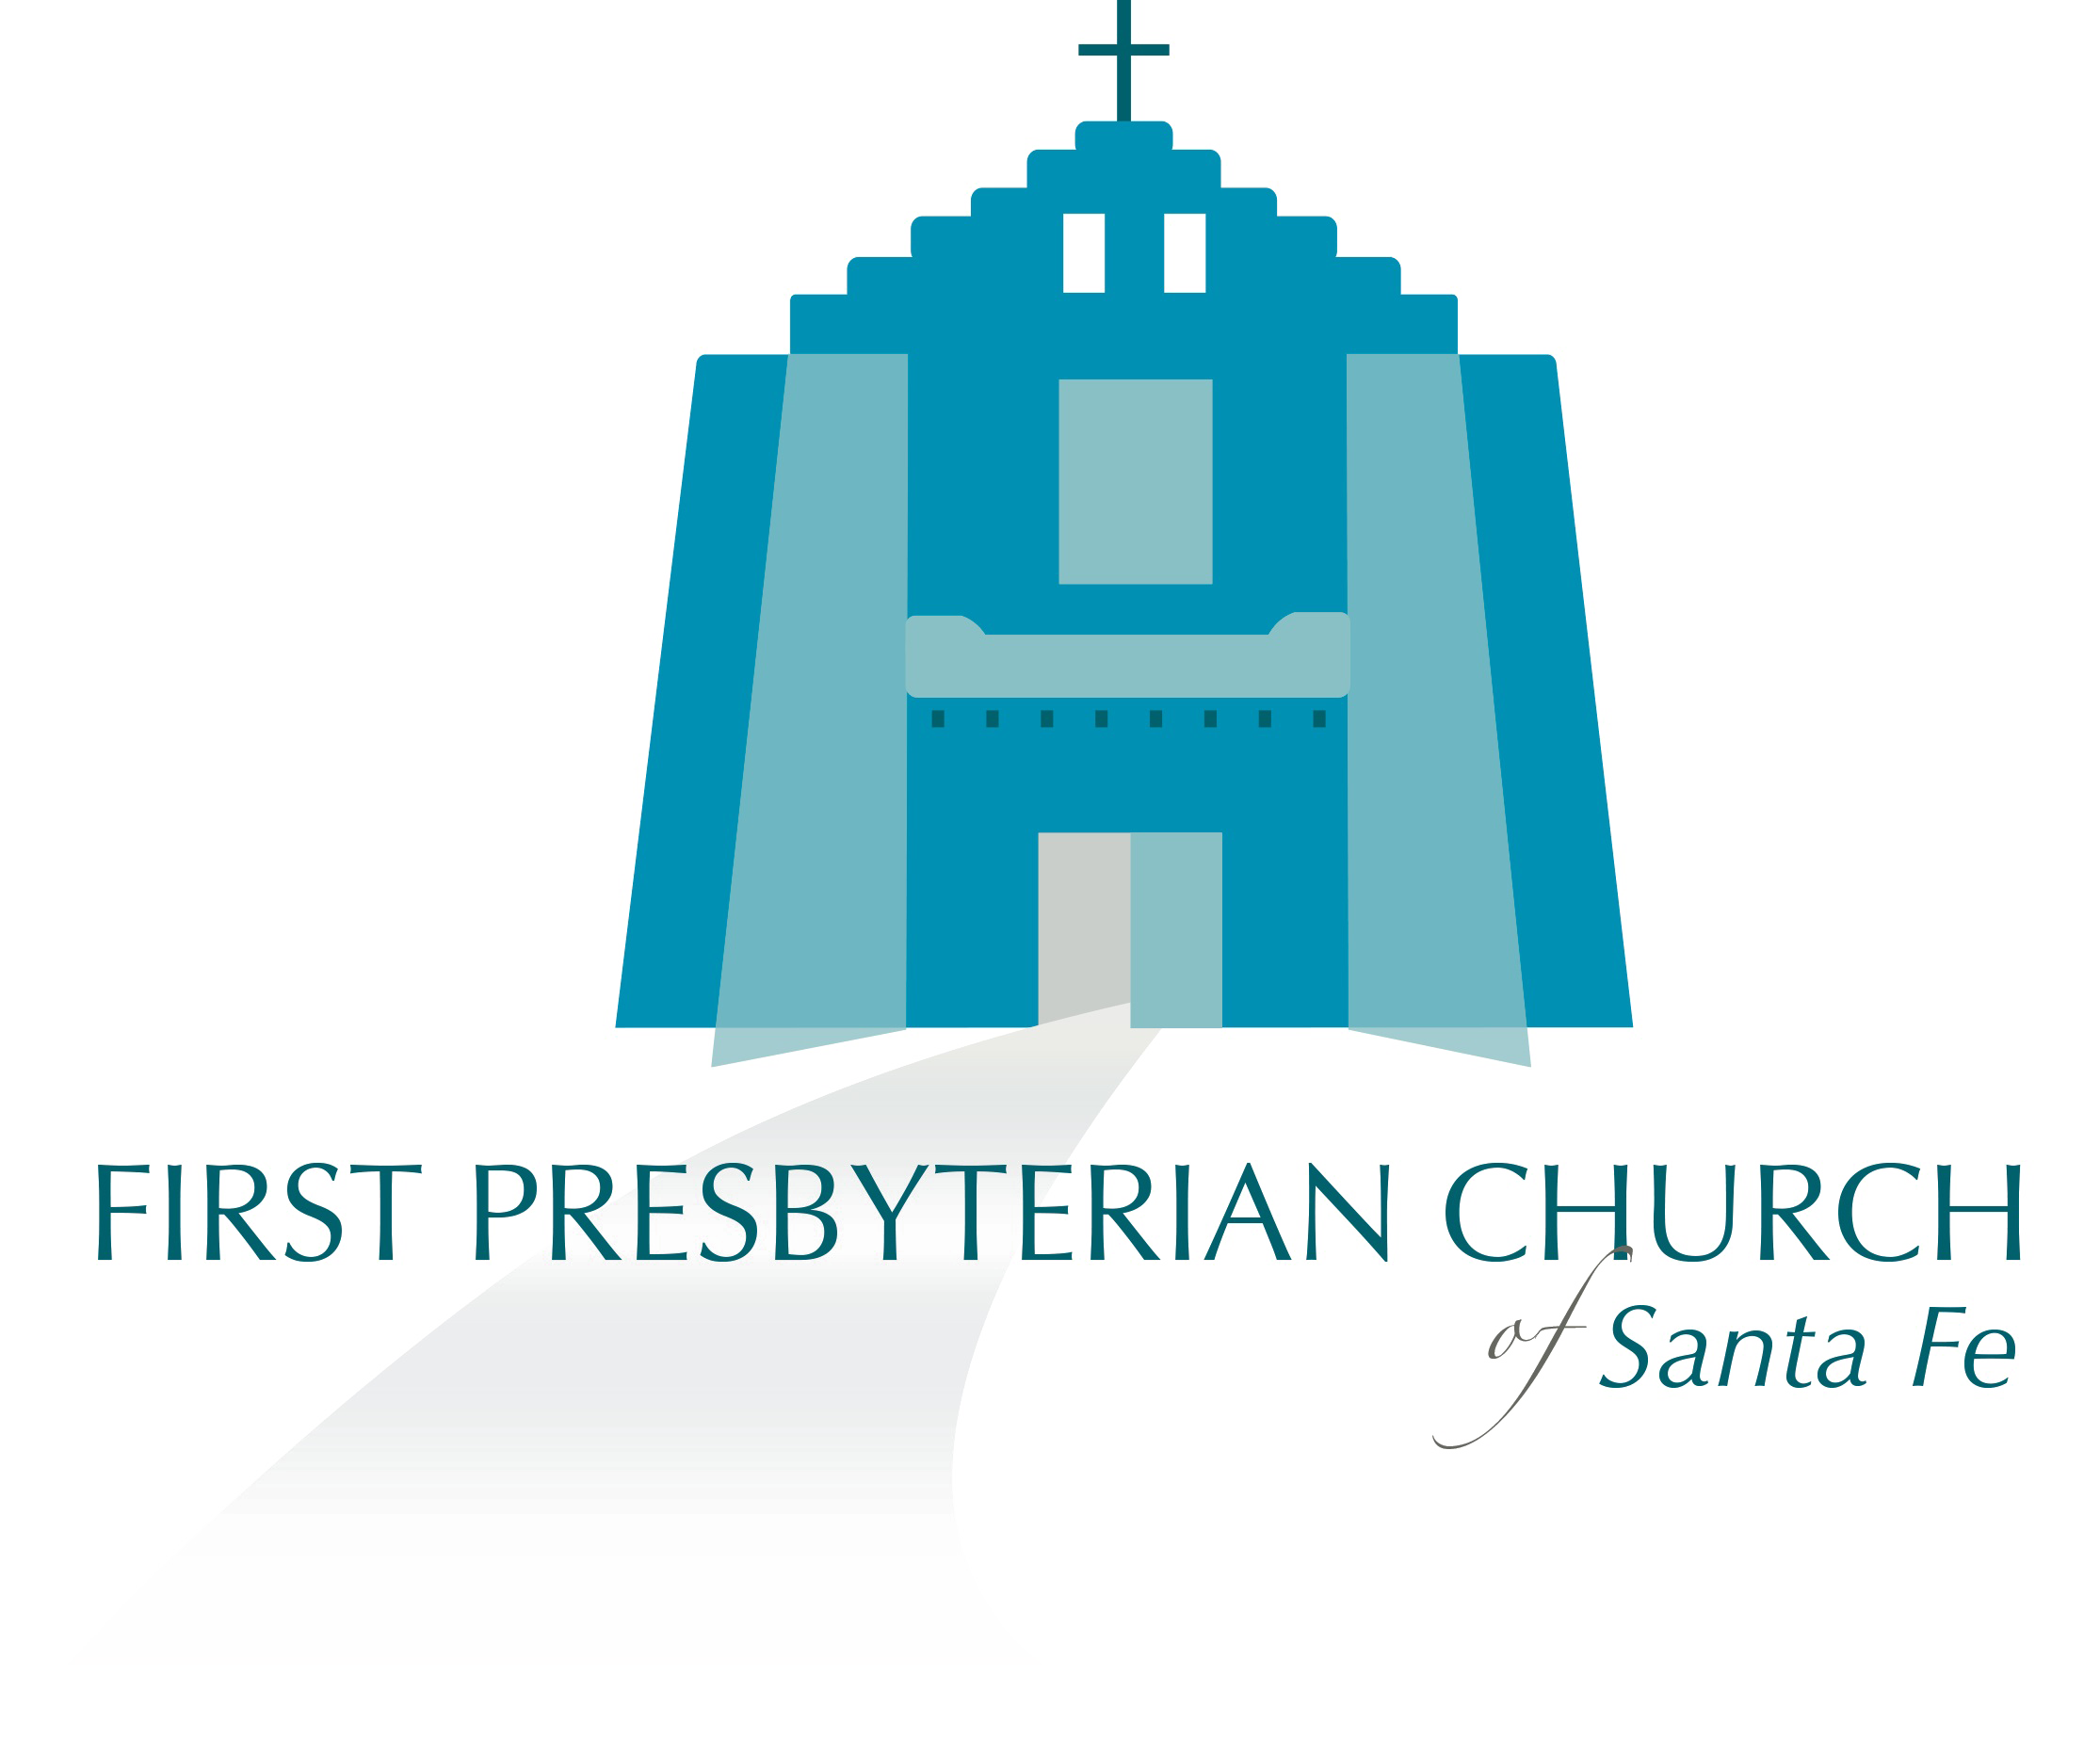 first presbyterian church logo